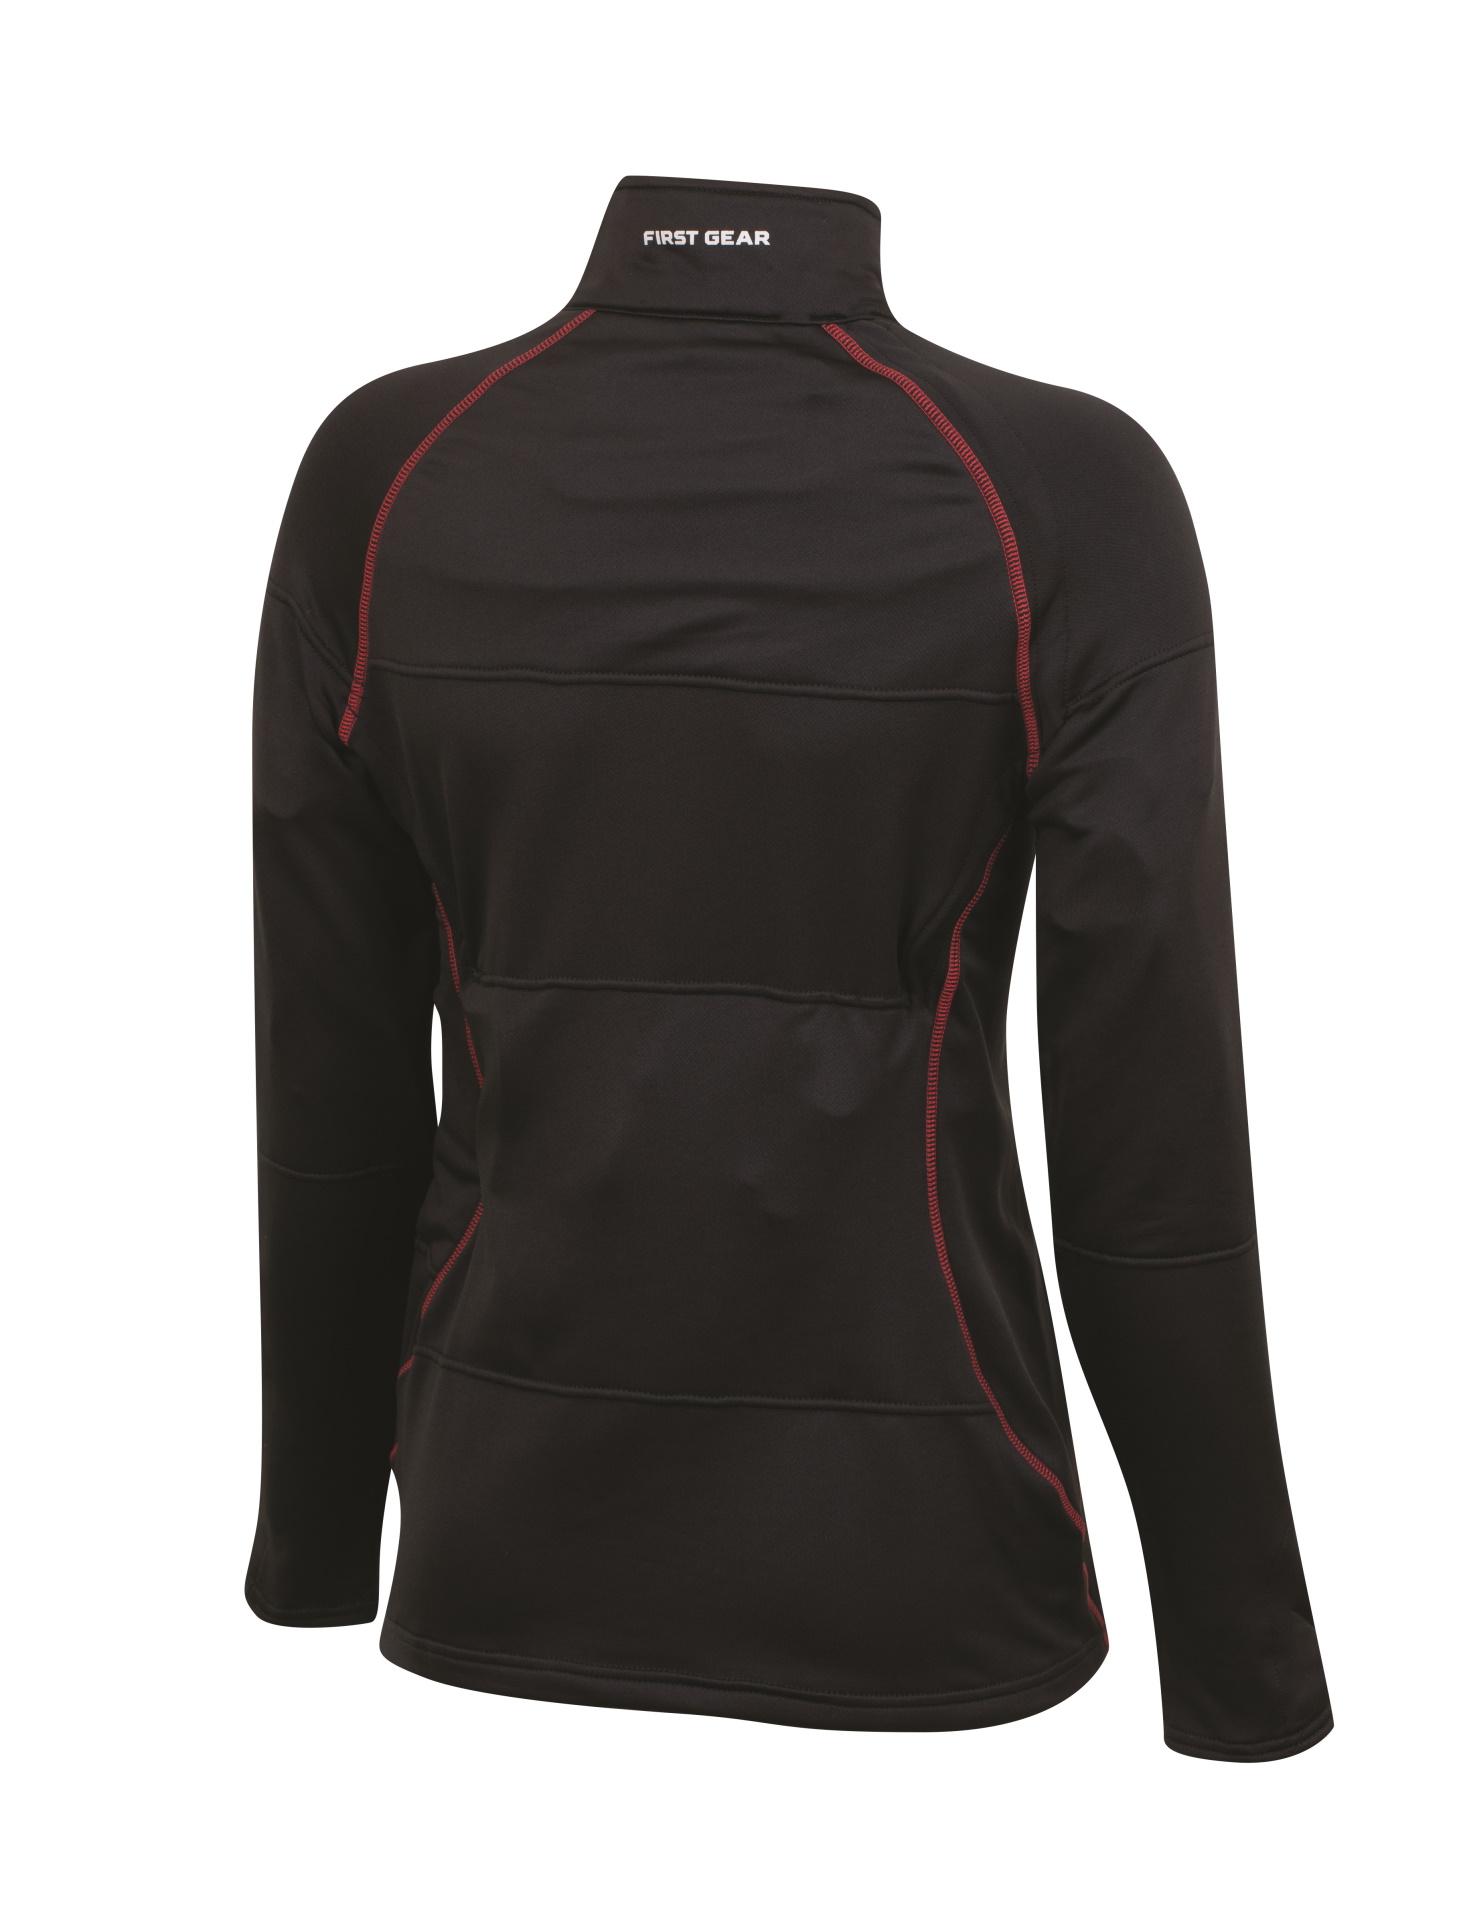 12V Heated Layer Shirt - Women's | Clothing | Premium Motorcycle ...